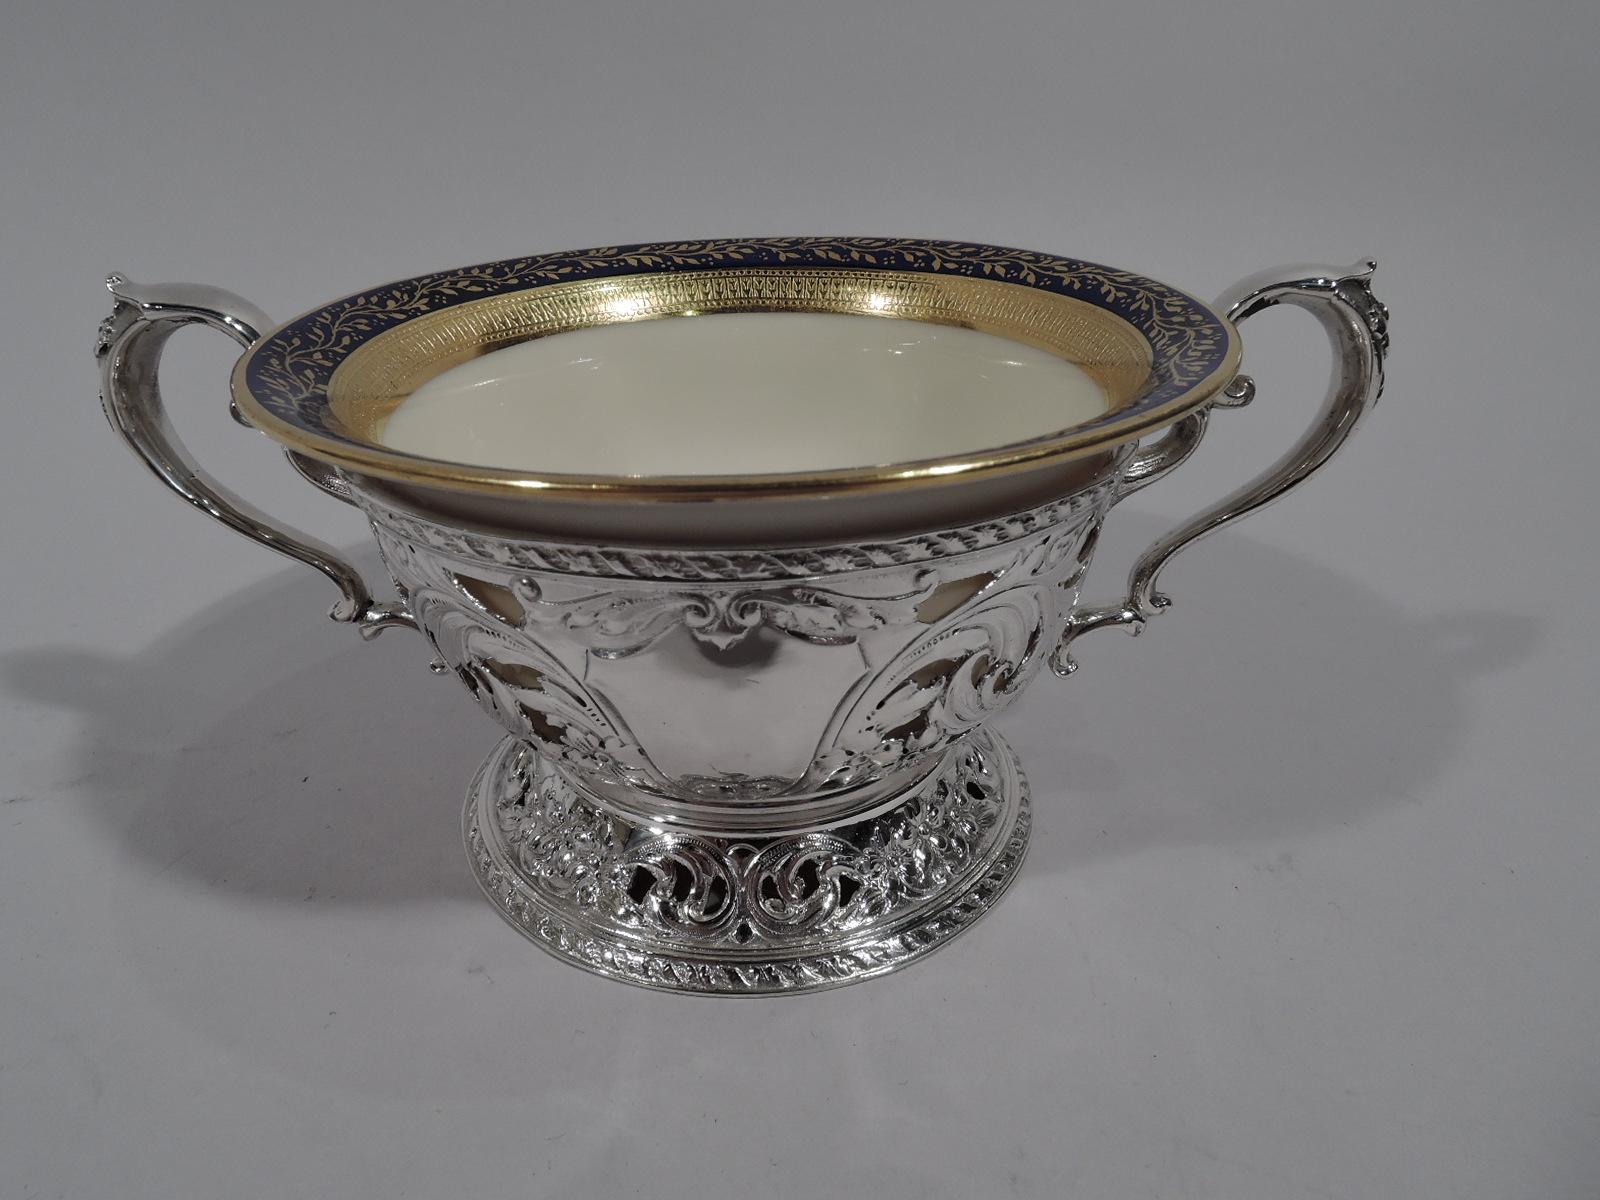 Set of 12 Lenox Bouillon Bowls in Gorham Sterling Silver Holders (amerikanisch)